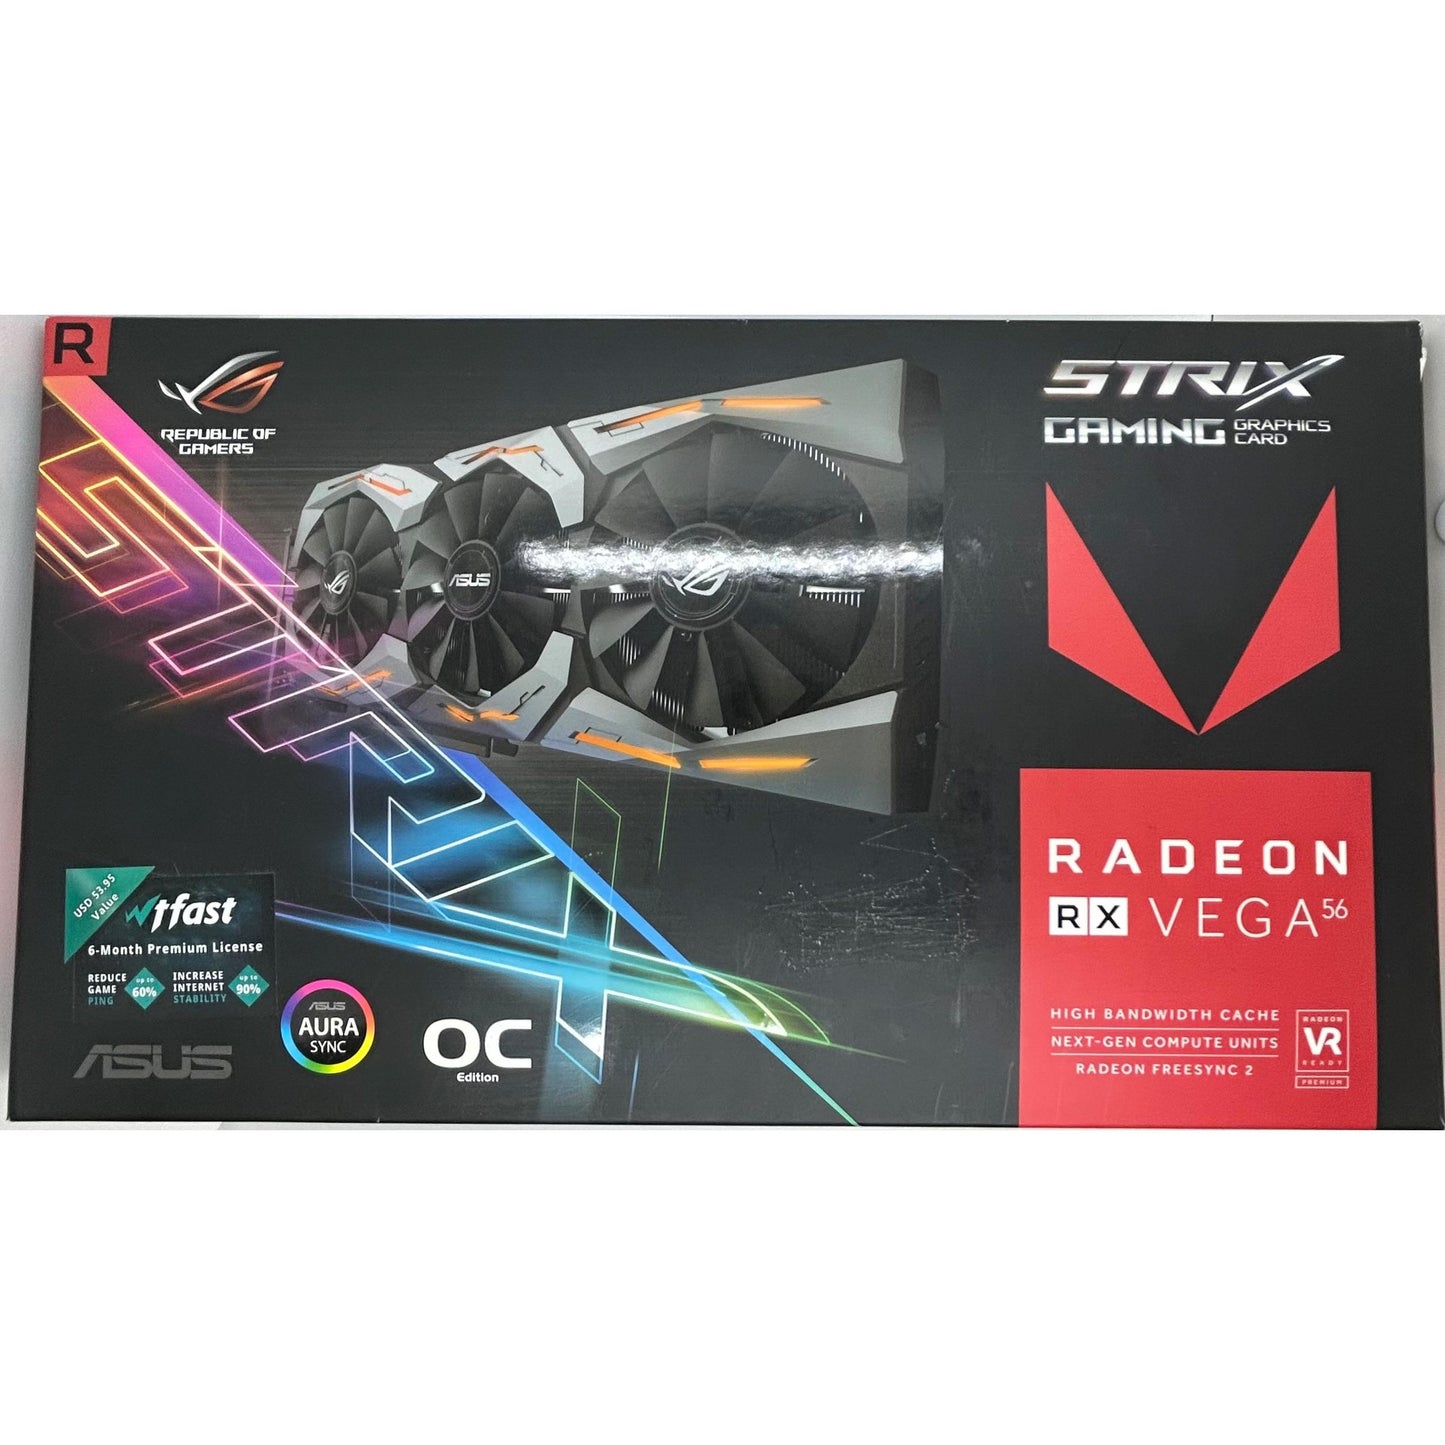 ASUS ROG Strix Radeon RX Vega56 8GB HBM2 | Vollständige OVP